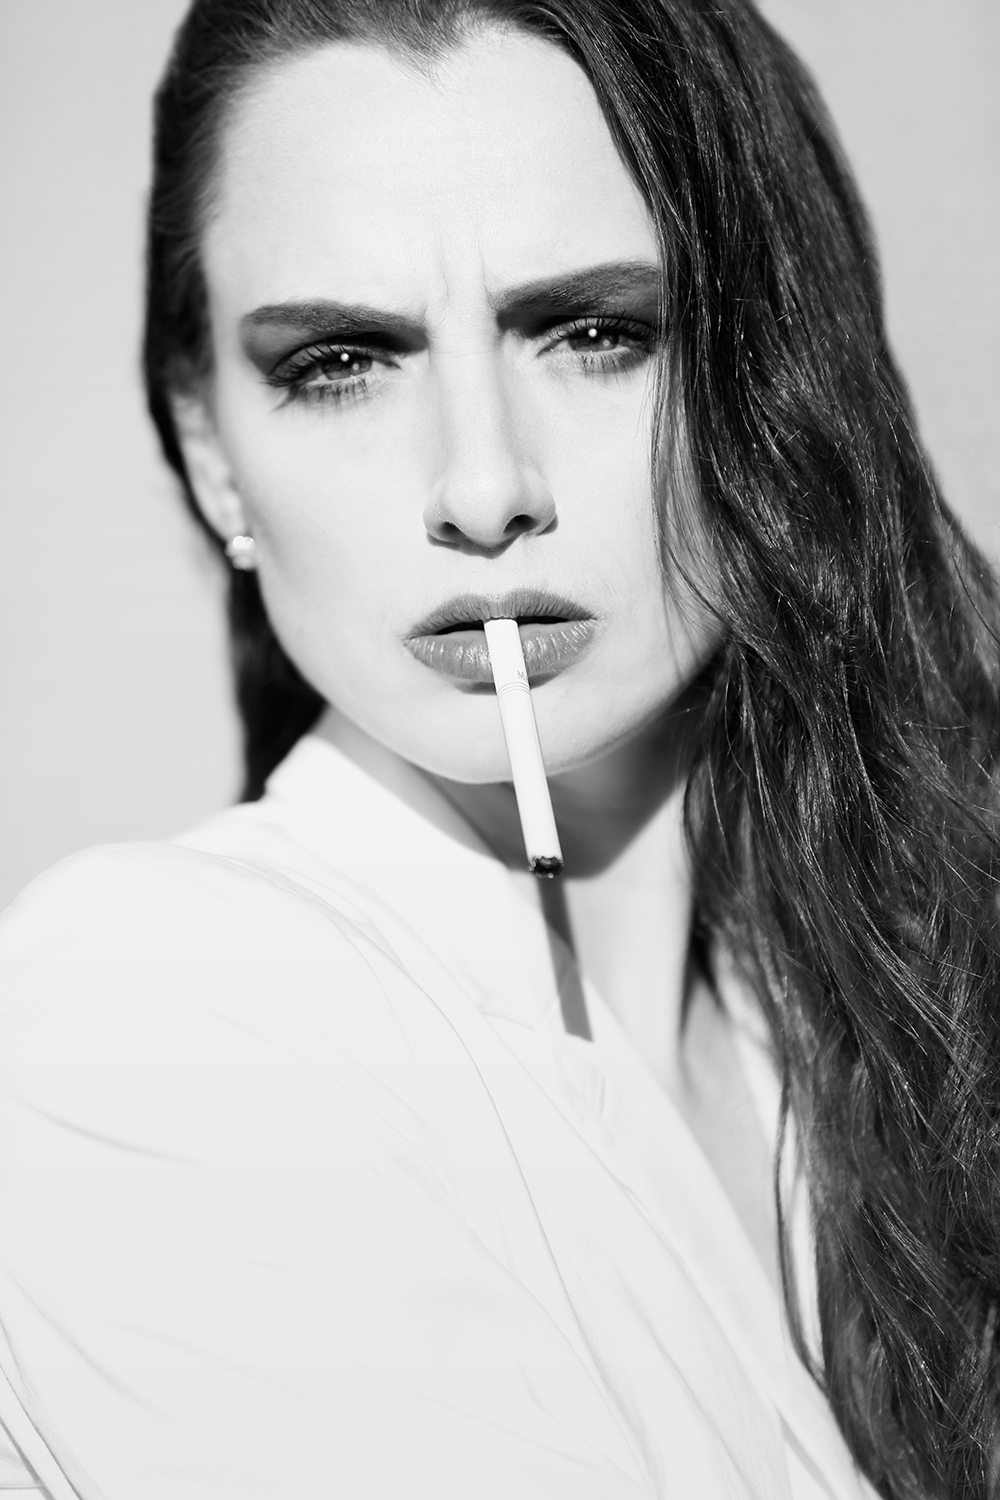 cleveland-headshot-photographer-model-with-cigarette.jpg